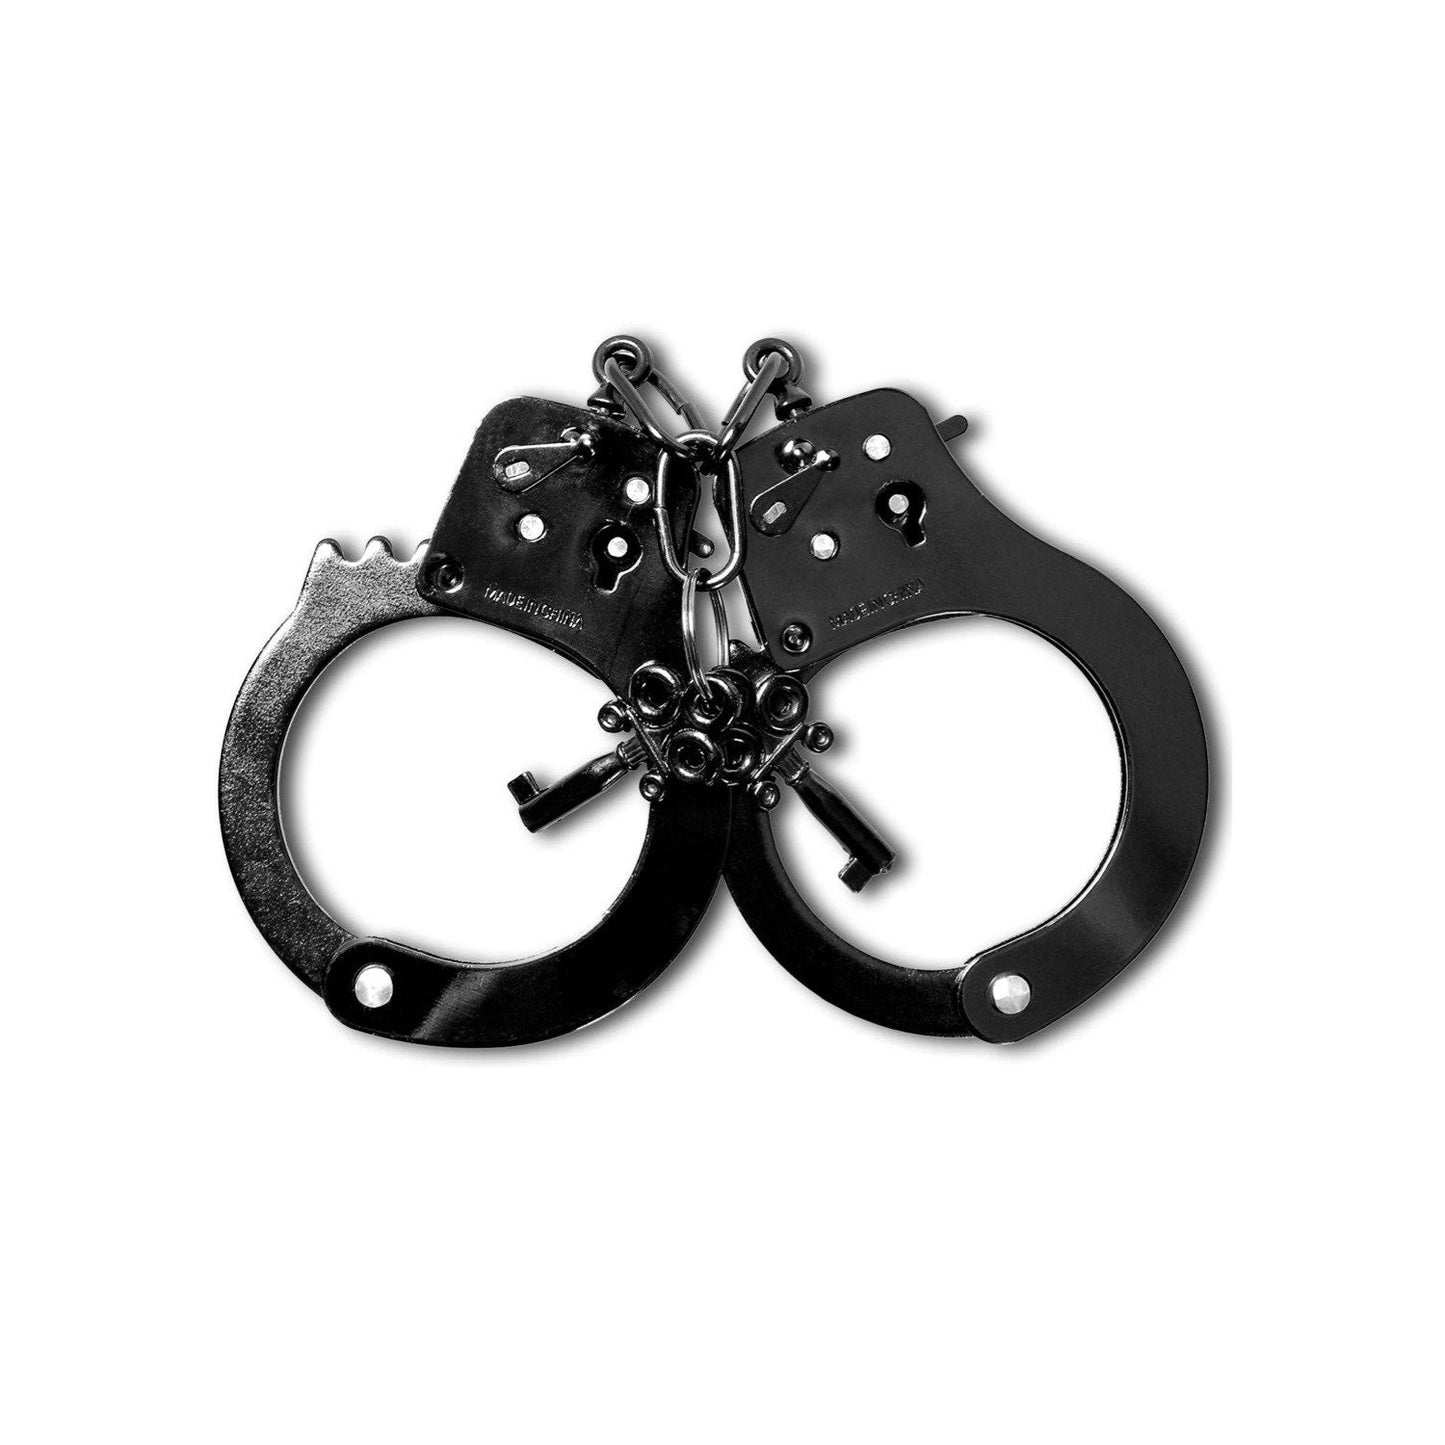 Anodized Cuffs - Black Metal Restraints